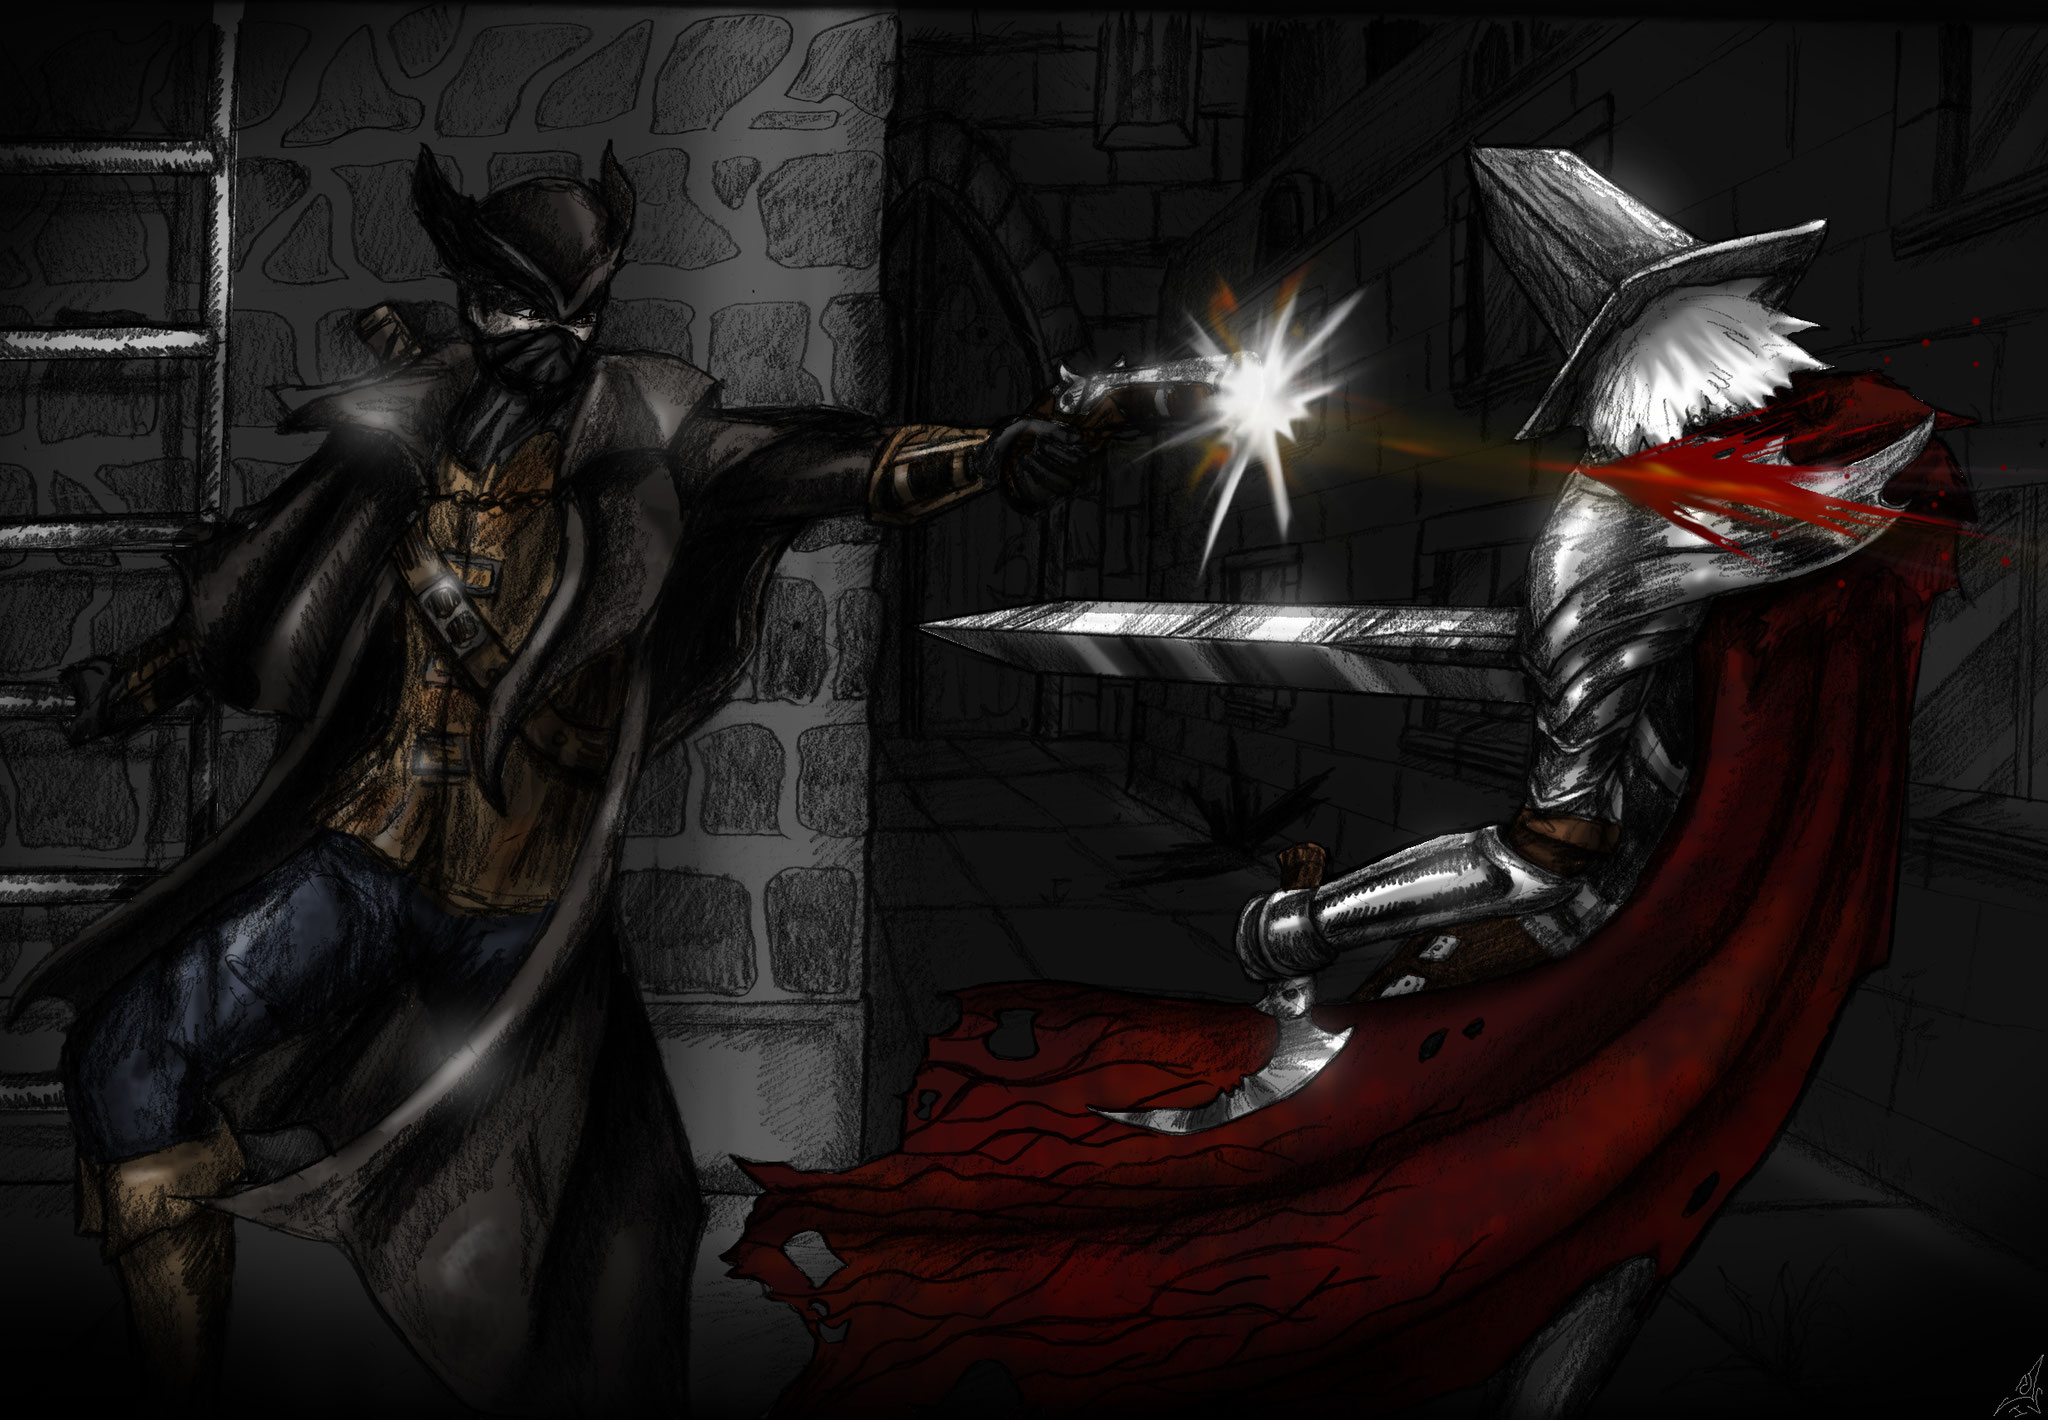 Abyss watcher vs bloodborne's hunter - Dark Souls III and Bloodborne